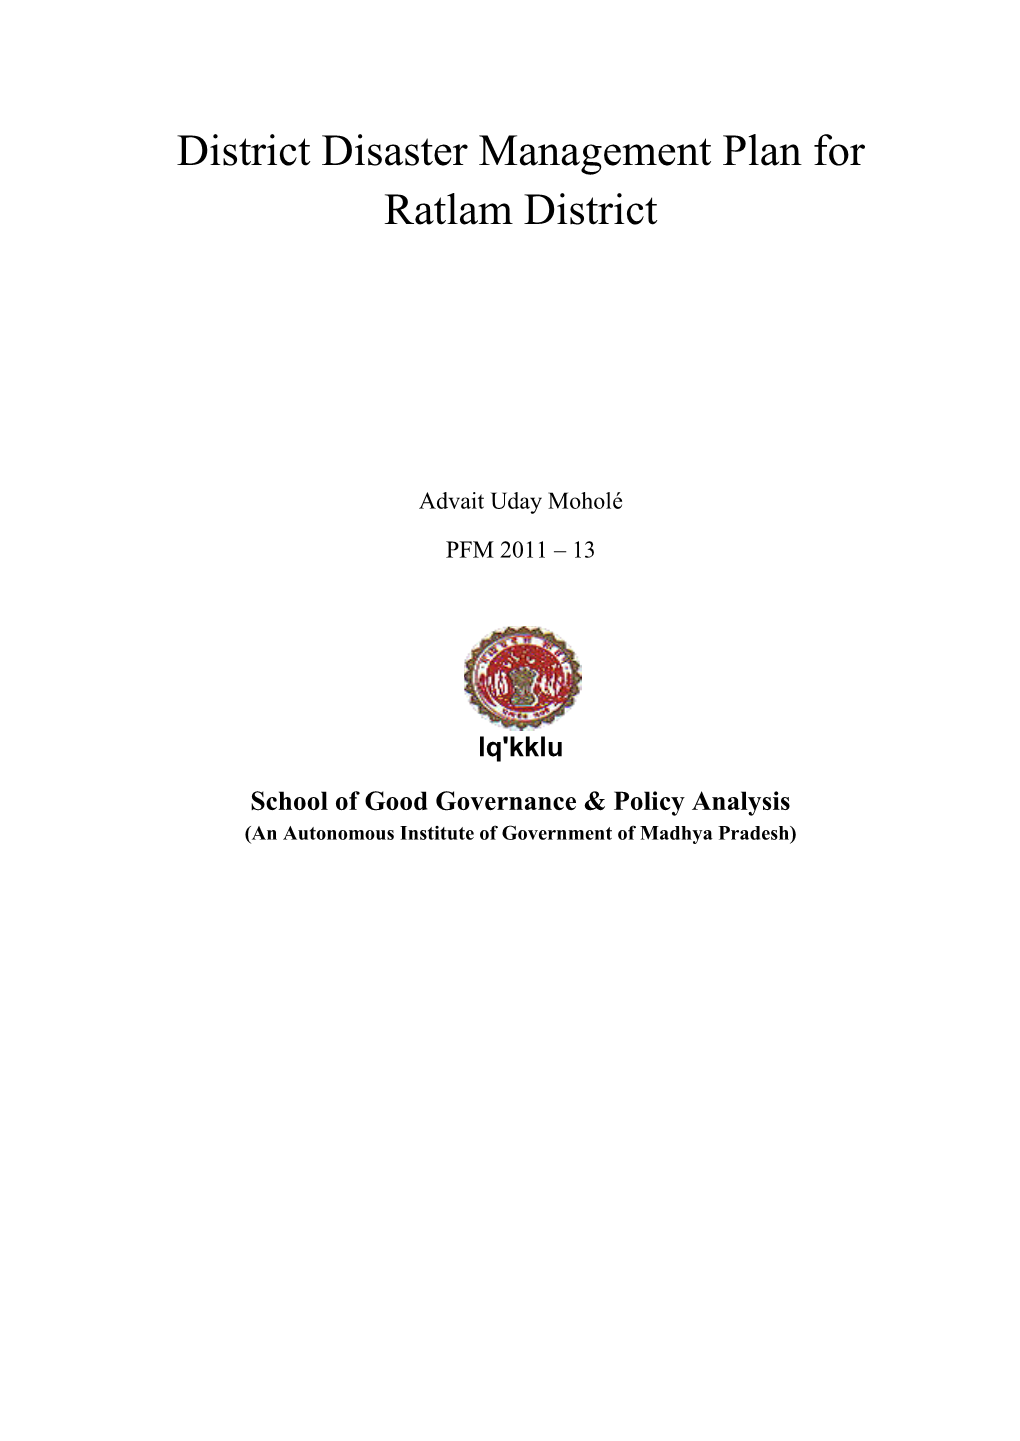 District Disaster Management Plan for Ratlam District